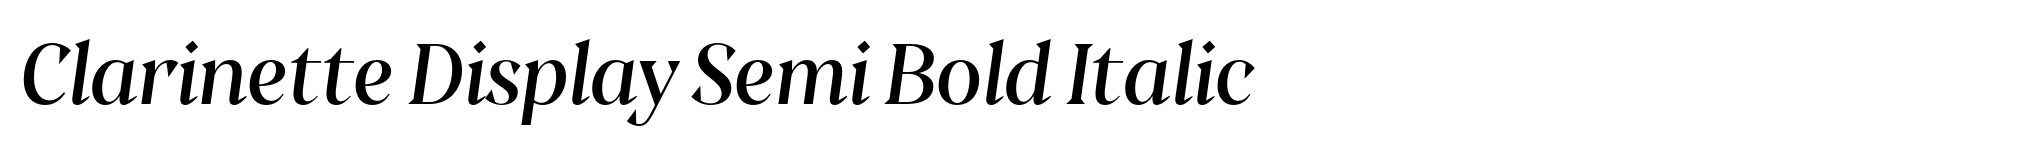 Clarinette Display Semi Bold Italic image